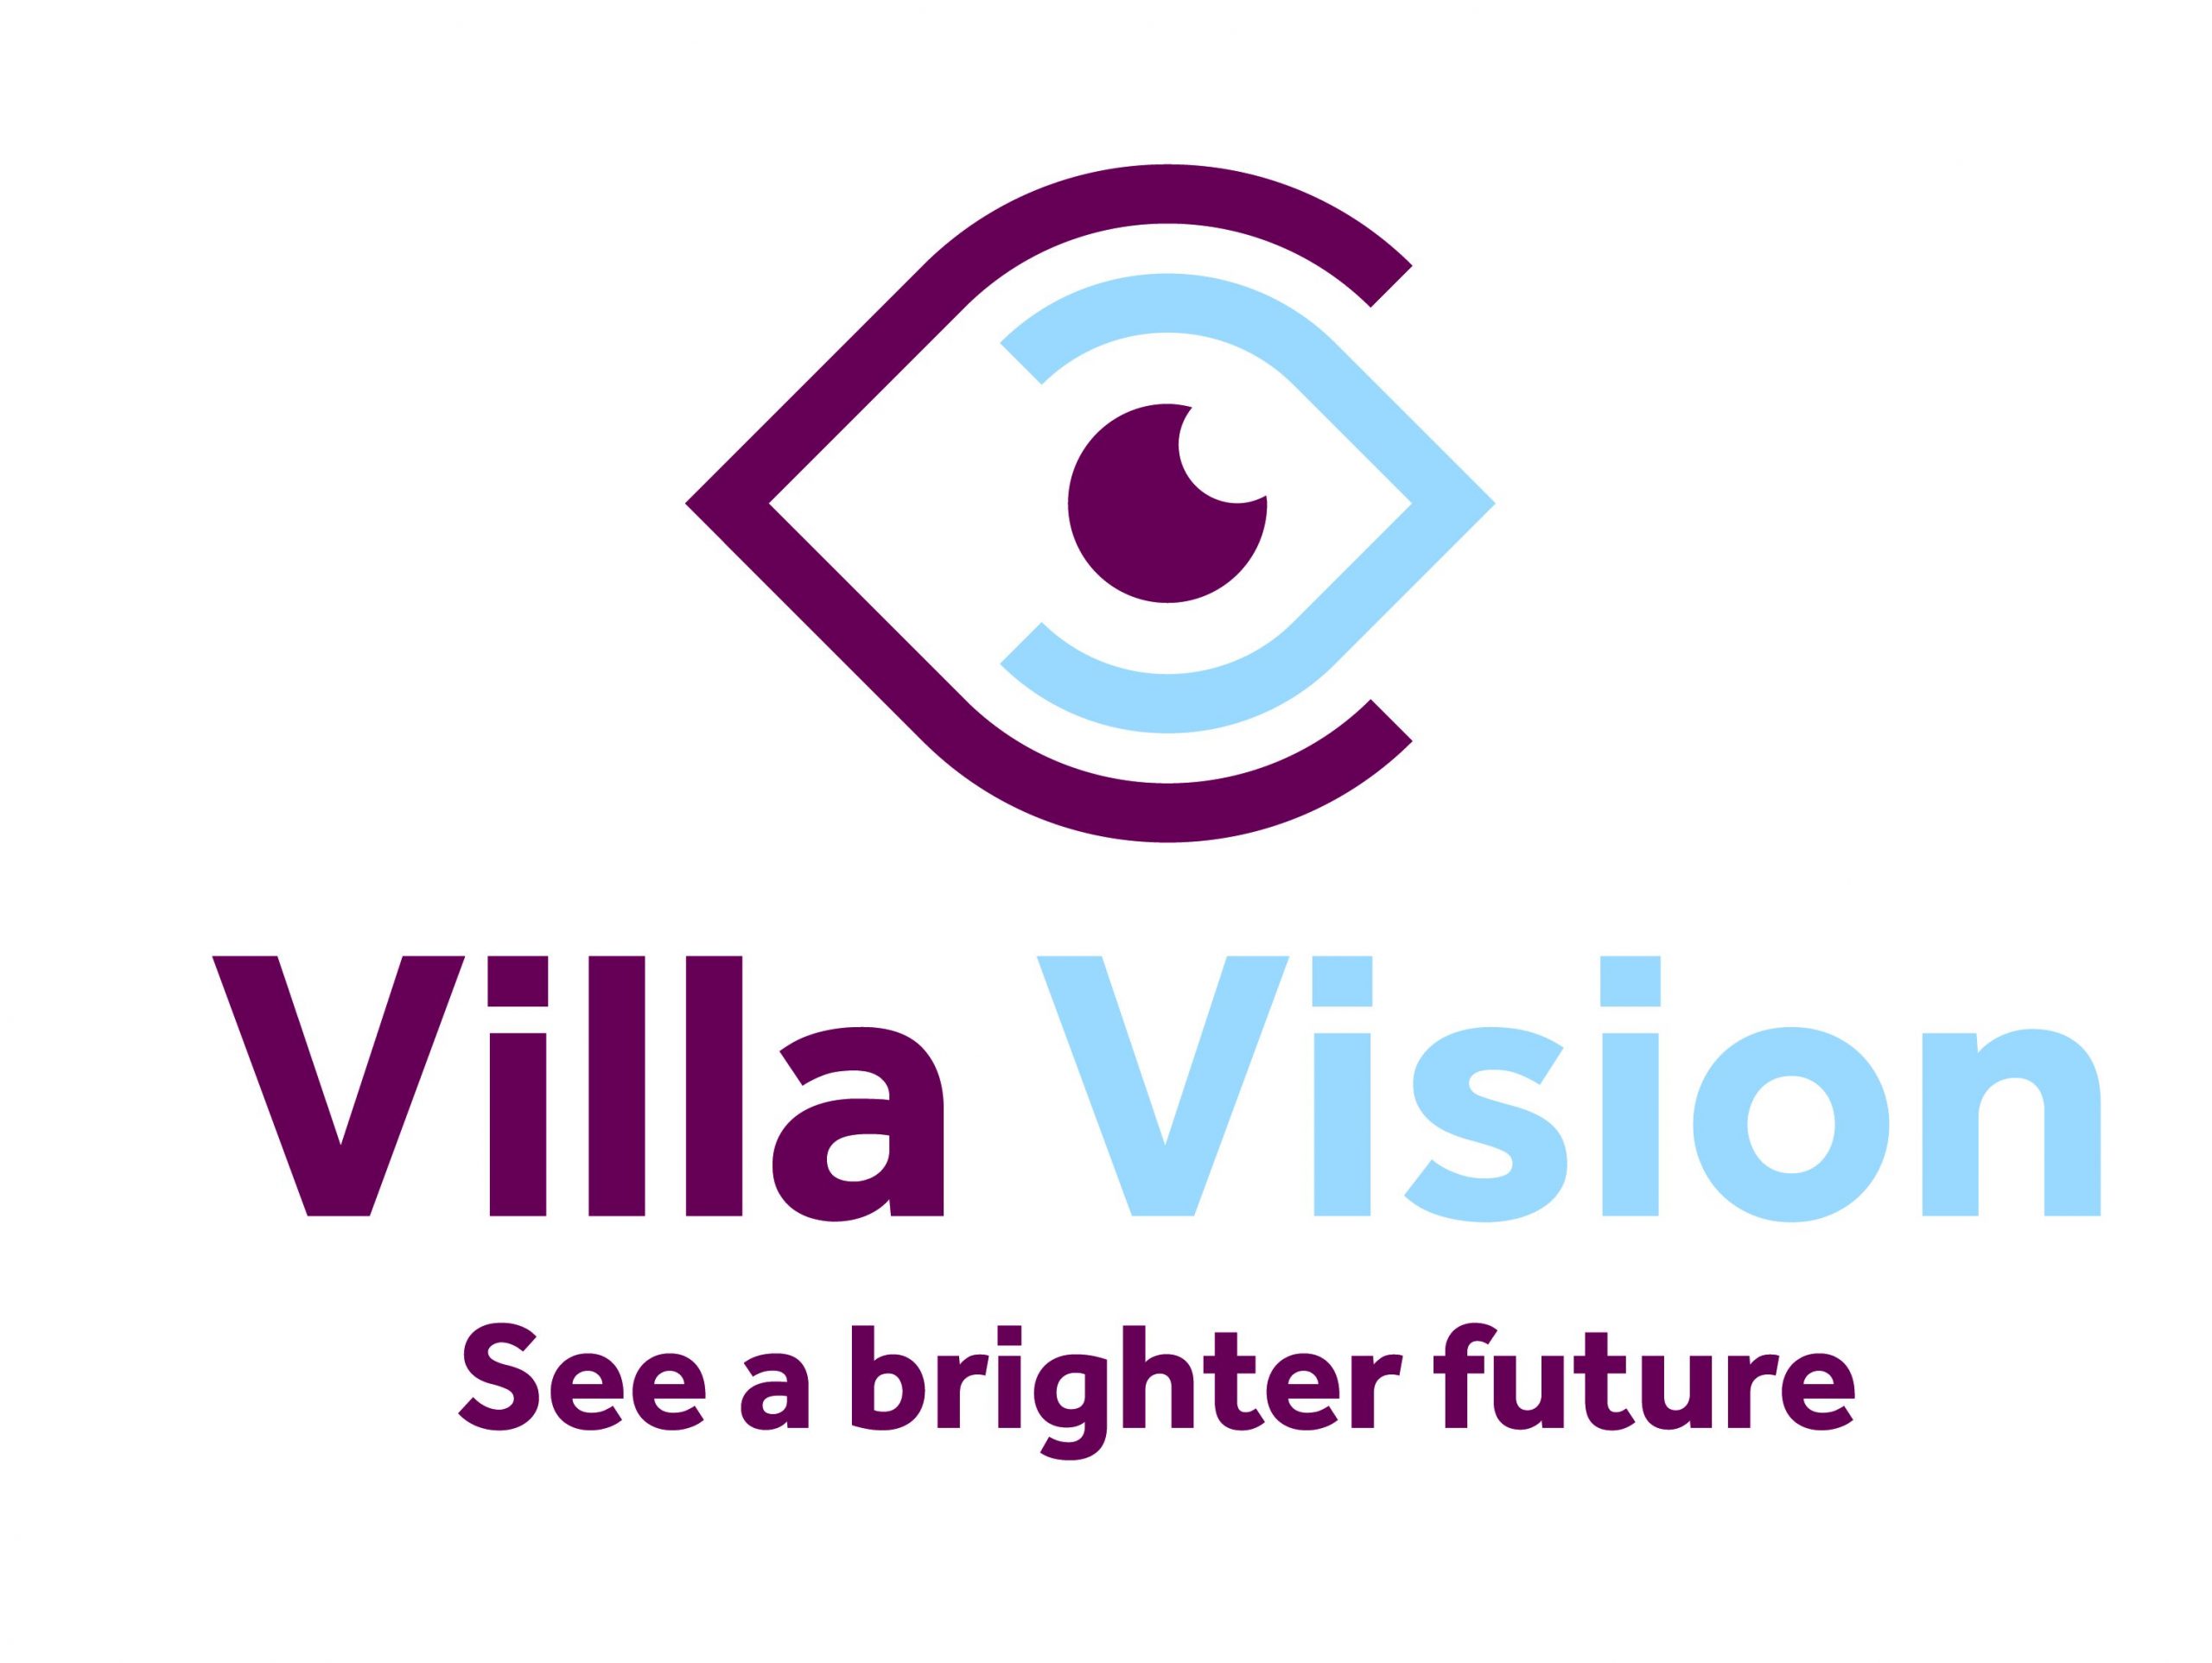 Villa Vision logo - See a brighter future.